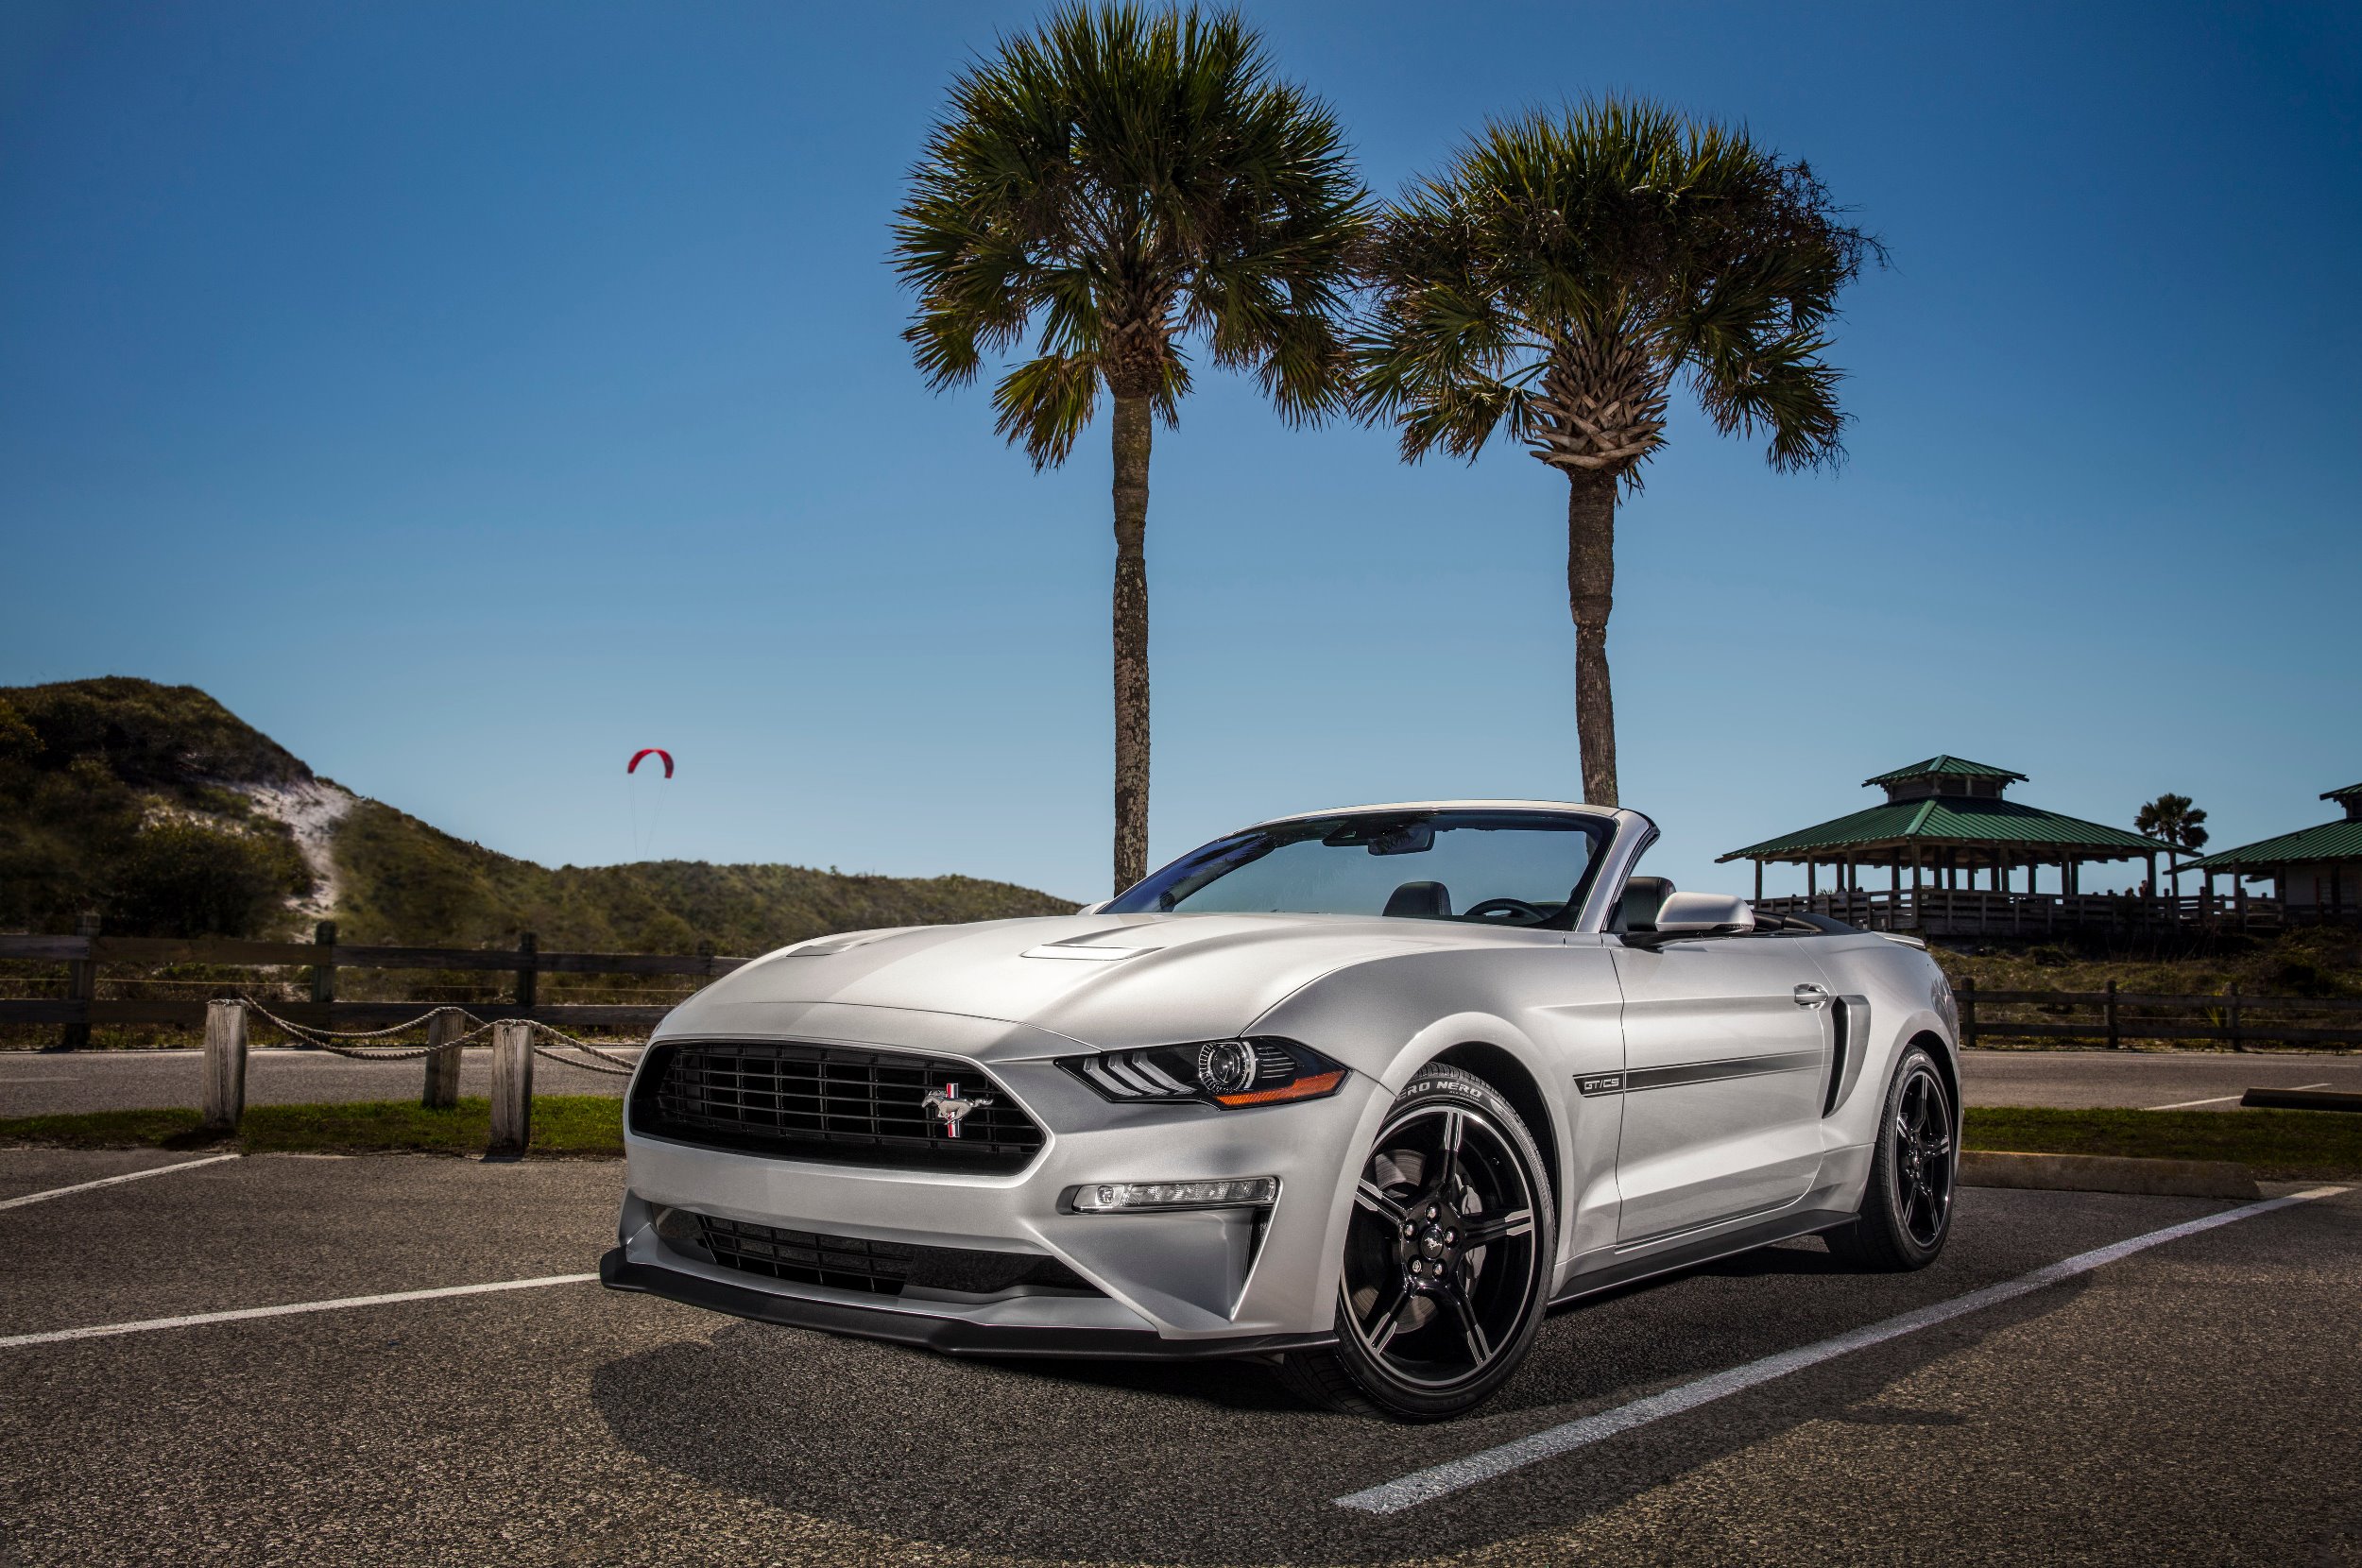 Ford презентовал спецверсию Mustang под названием California Special